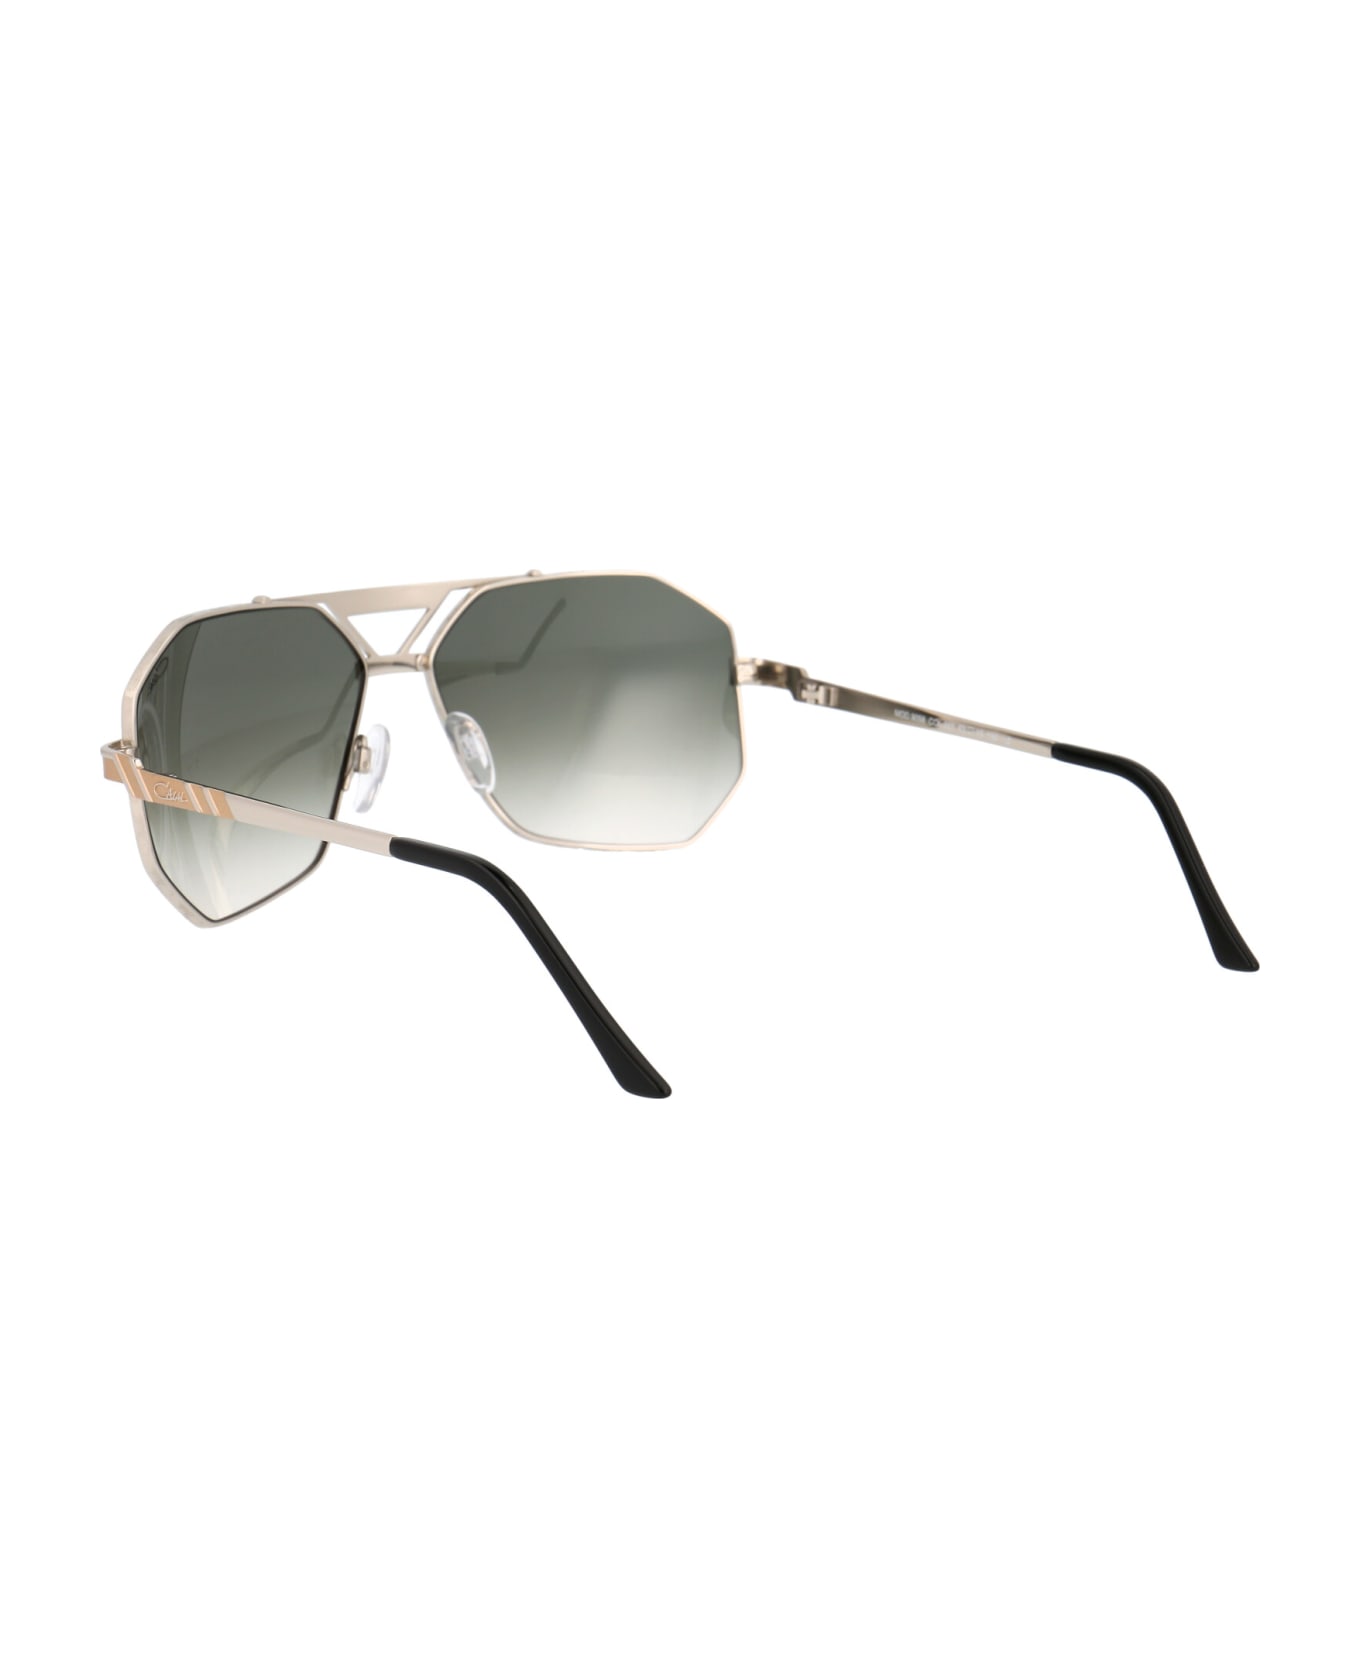 Cazal Mod. 9058 Sunglasses - 003 SILVER